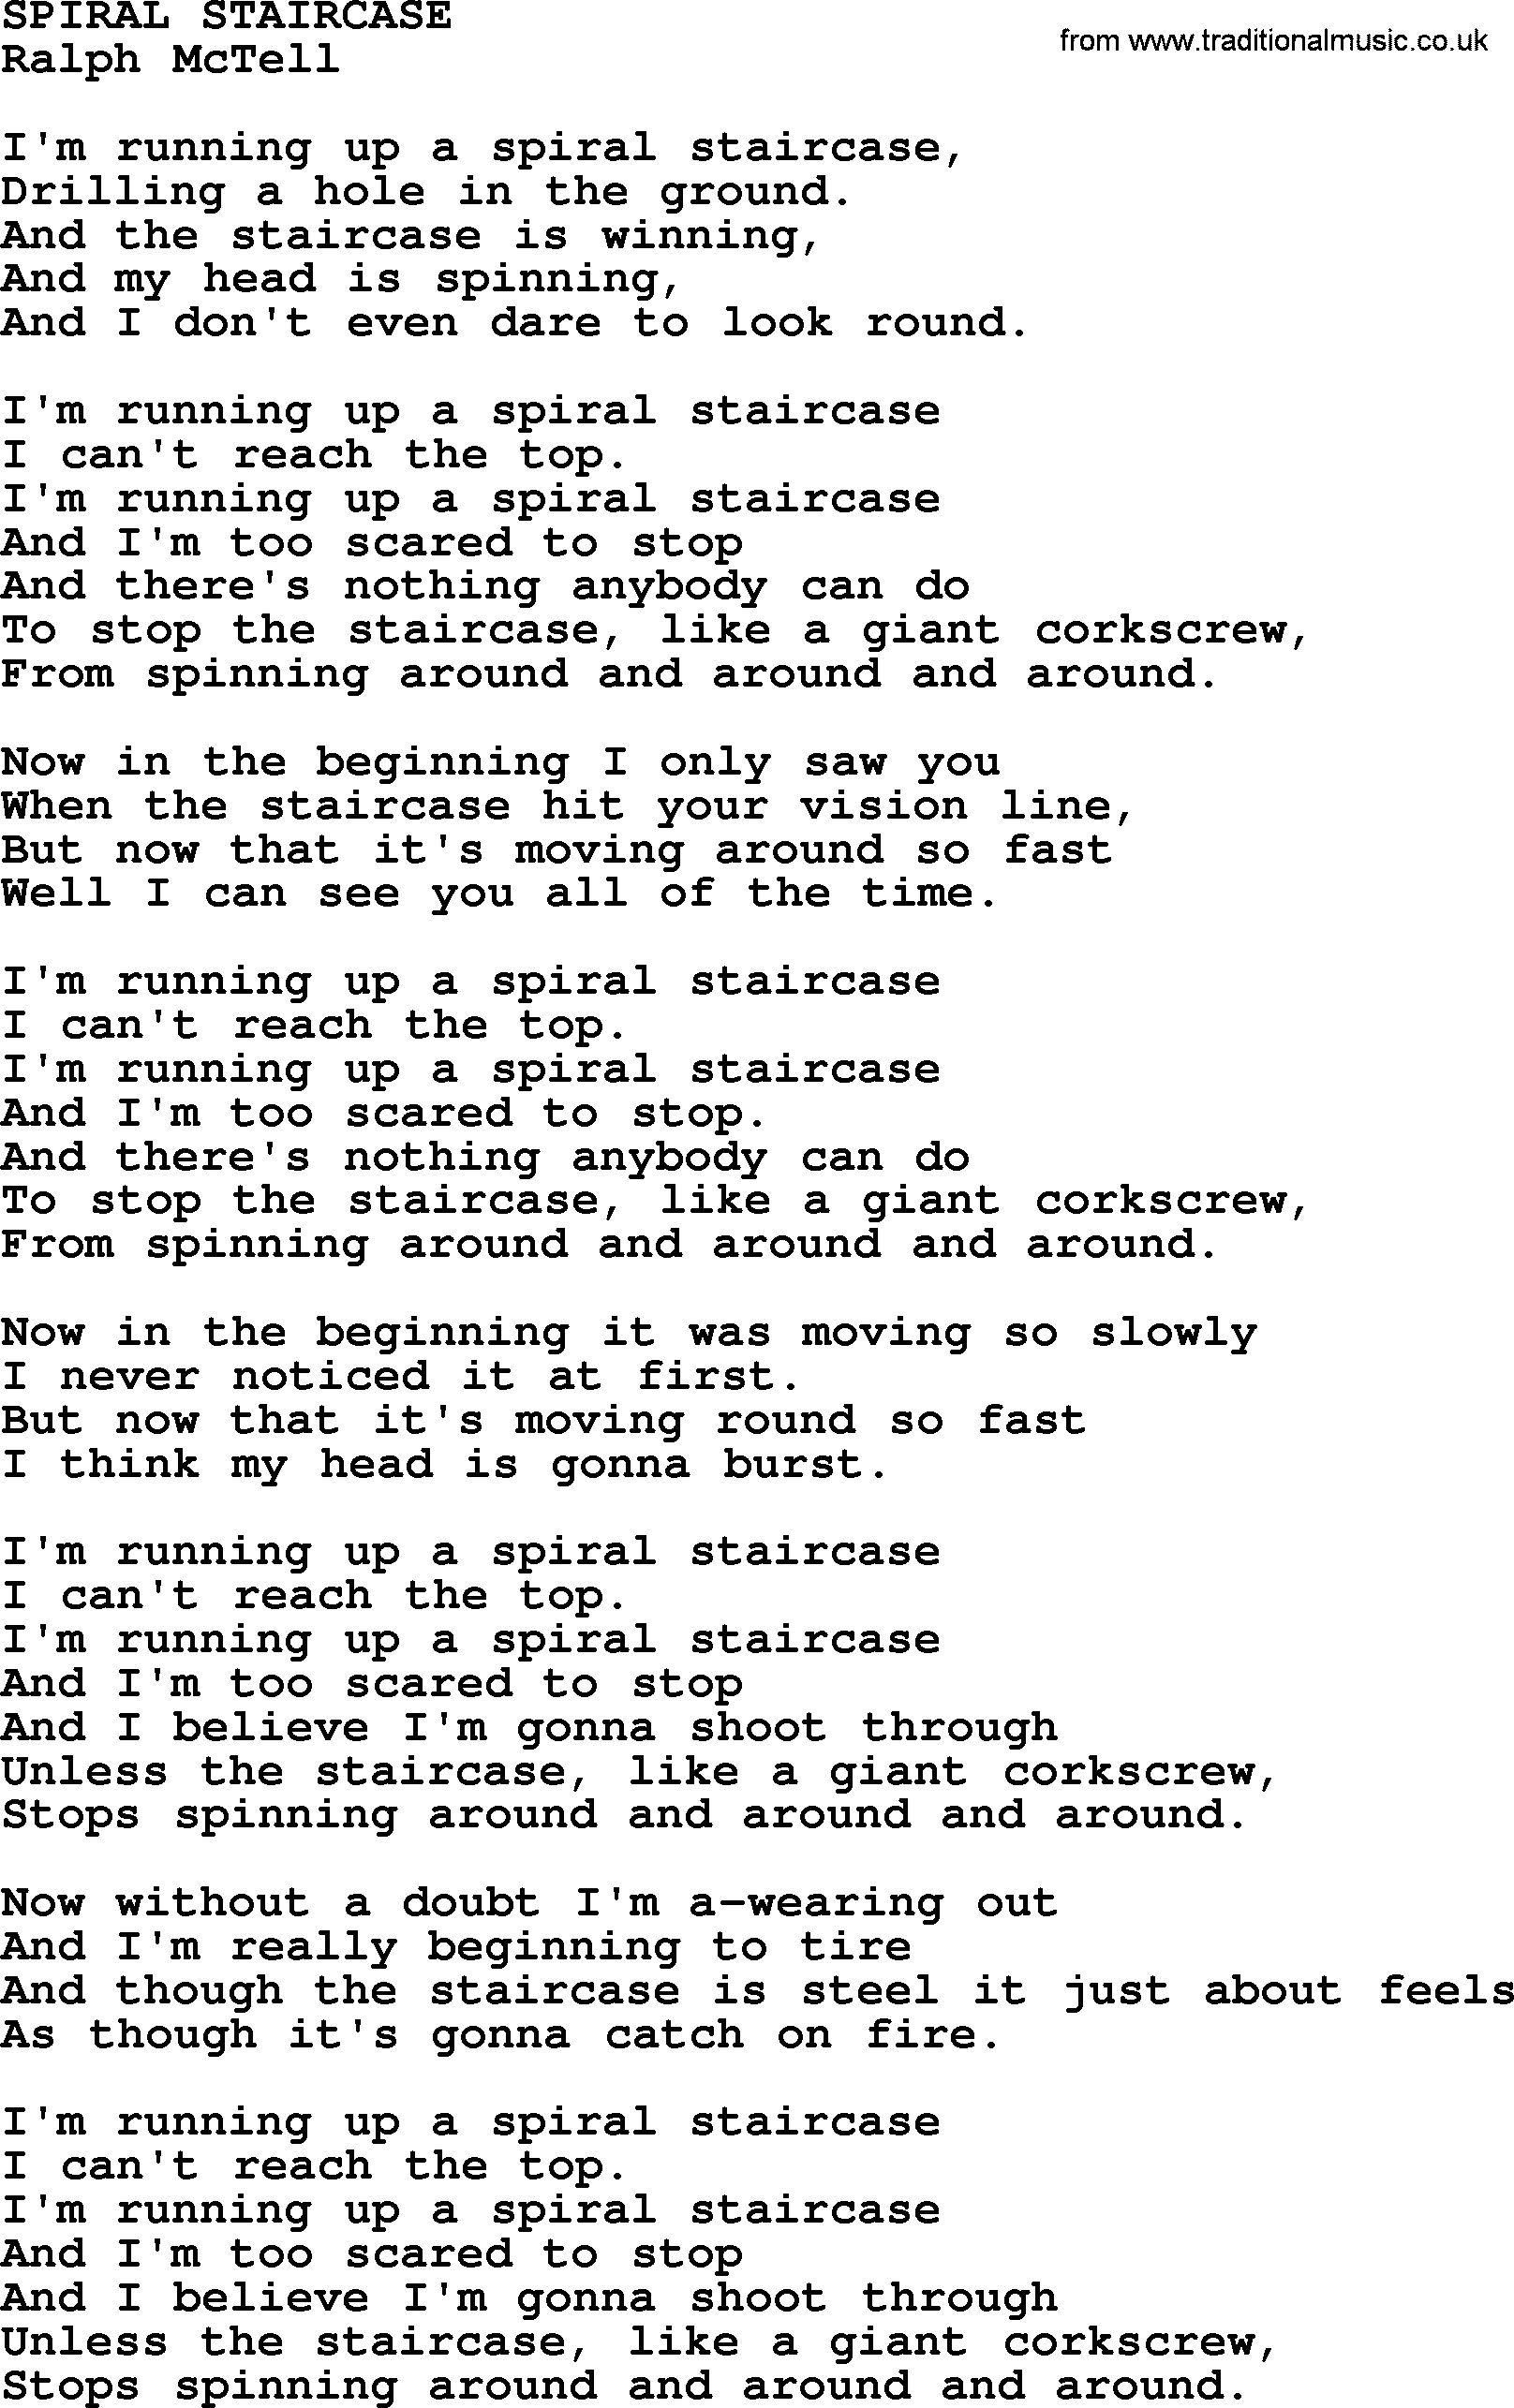 Ralph McTell Song: Spiral Staircase, lyrics